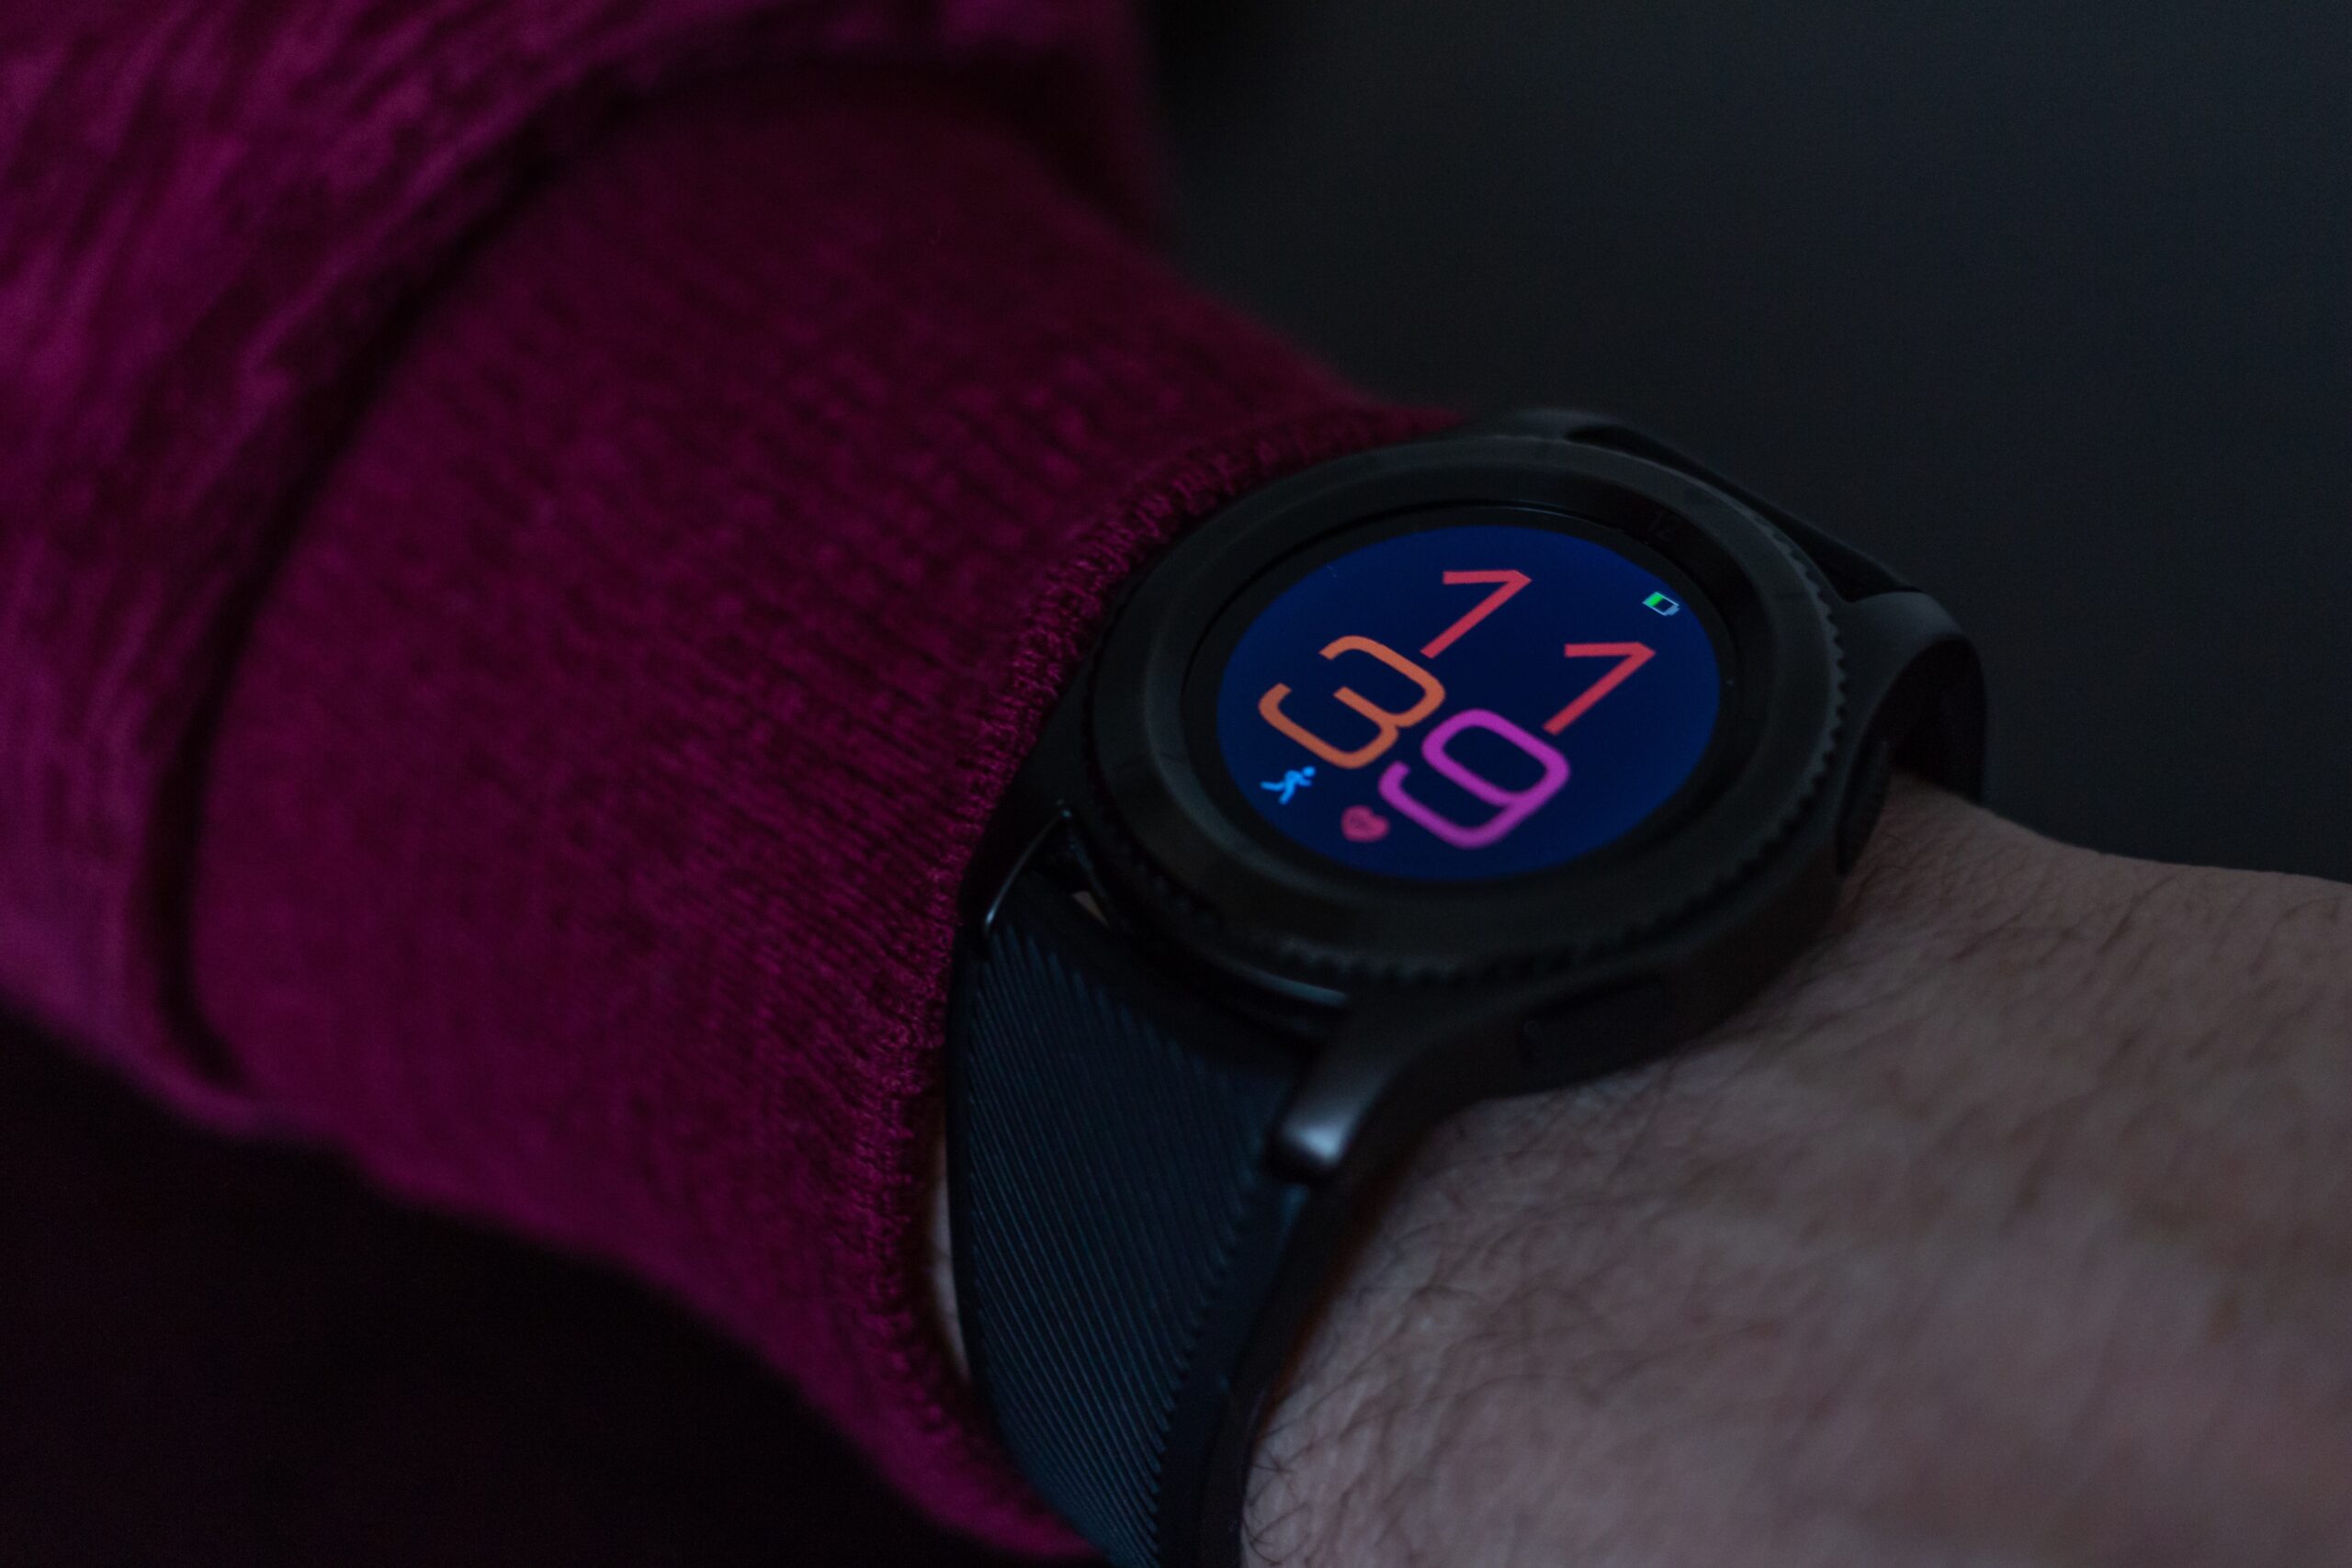 Geekran-smartwatch-sleek-design-fitness-tracking